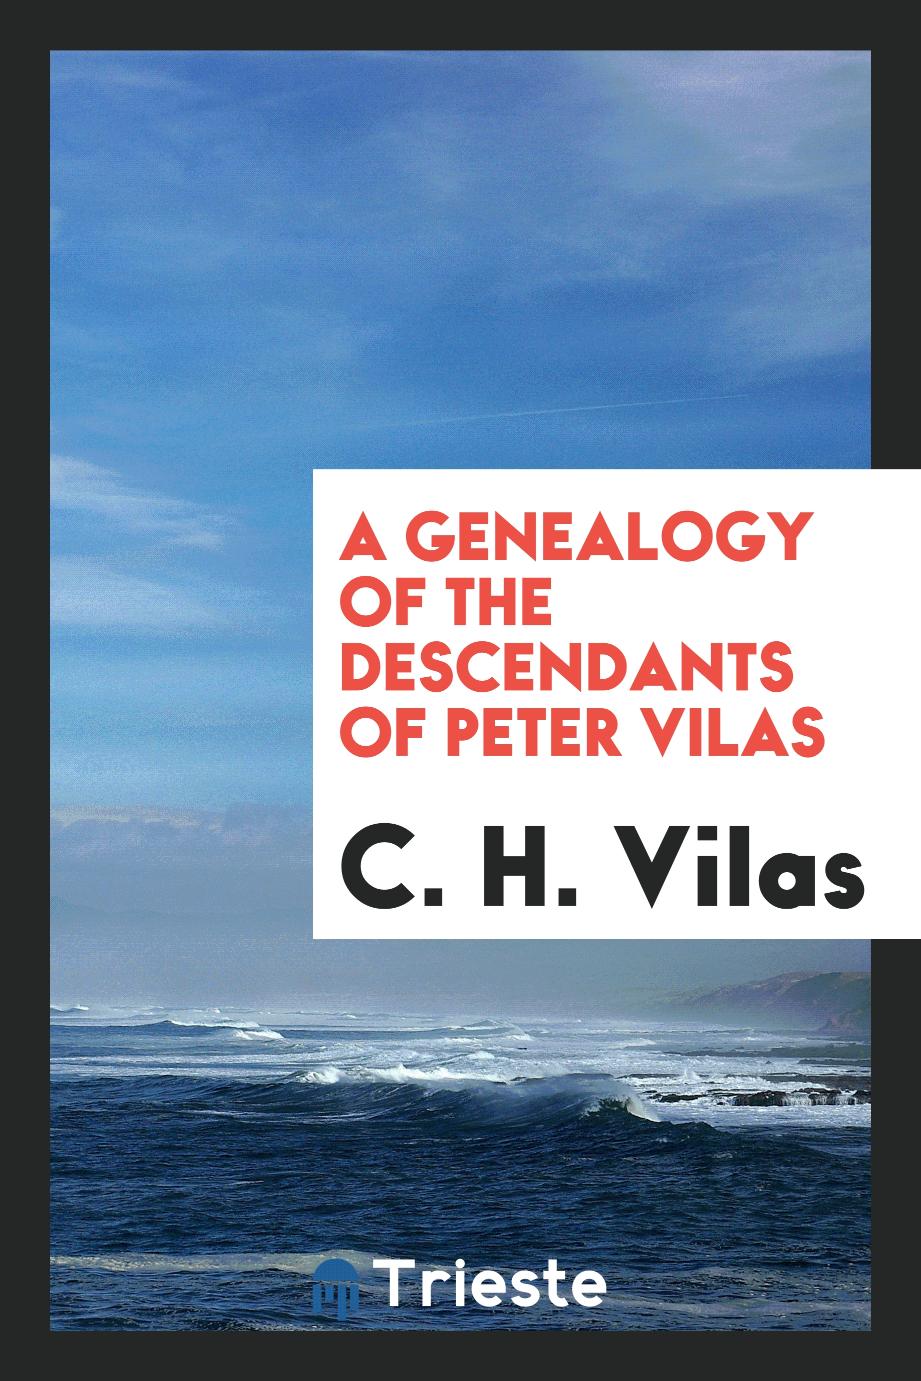 A genealogy of the descendants of Peter Vilas